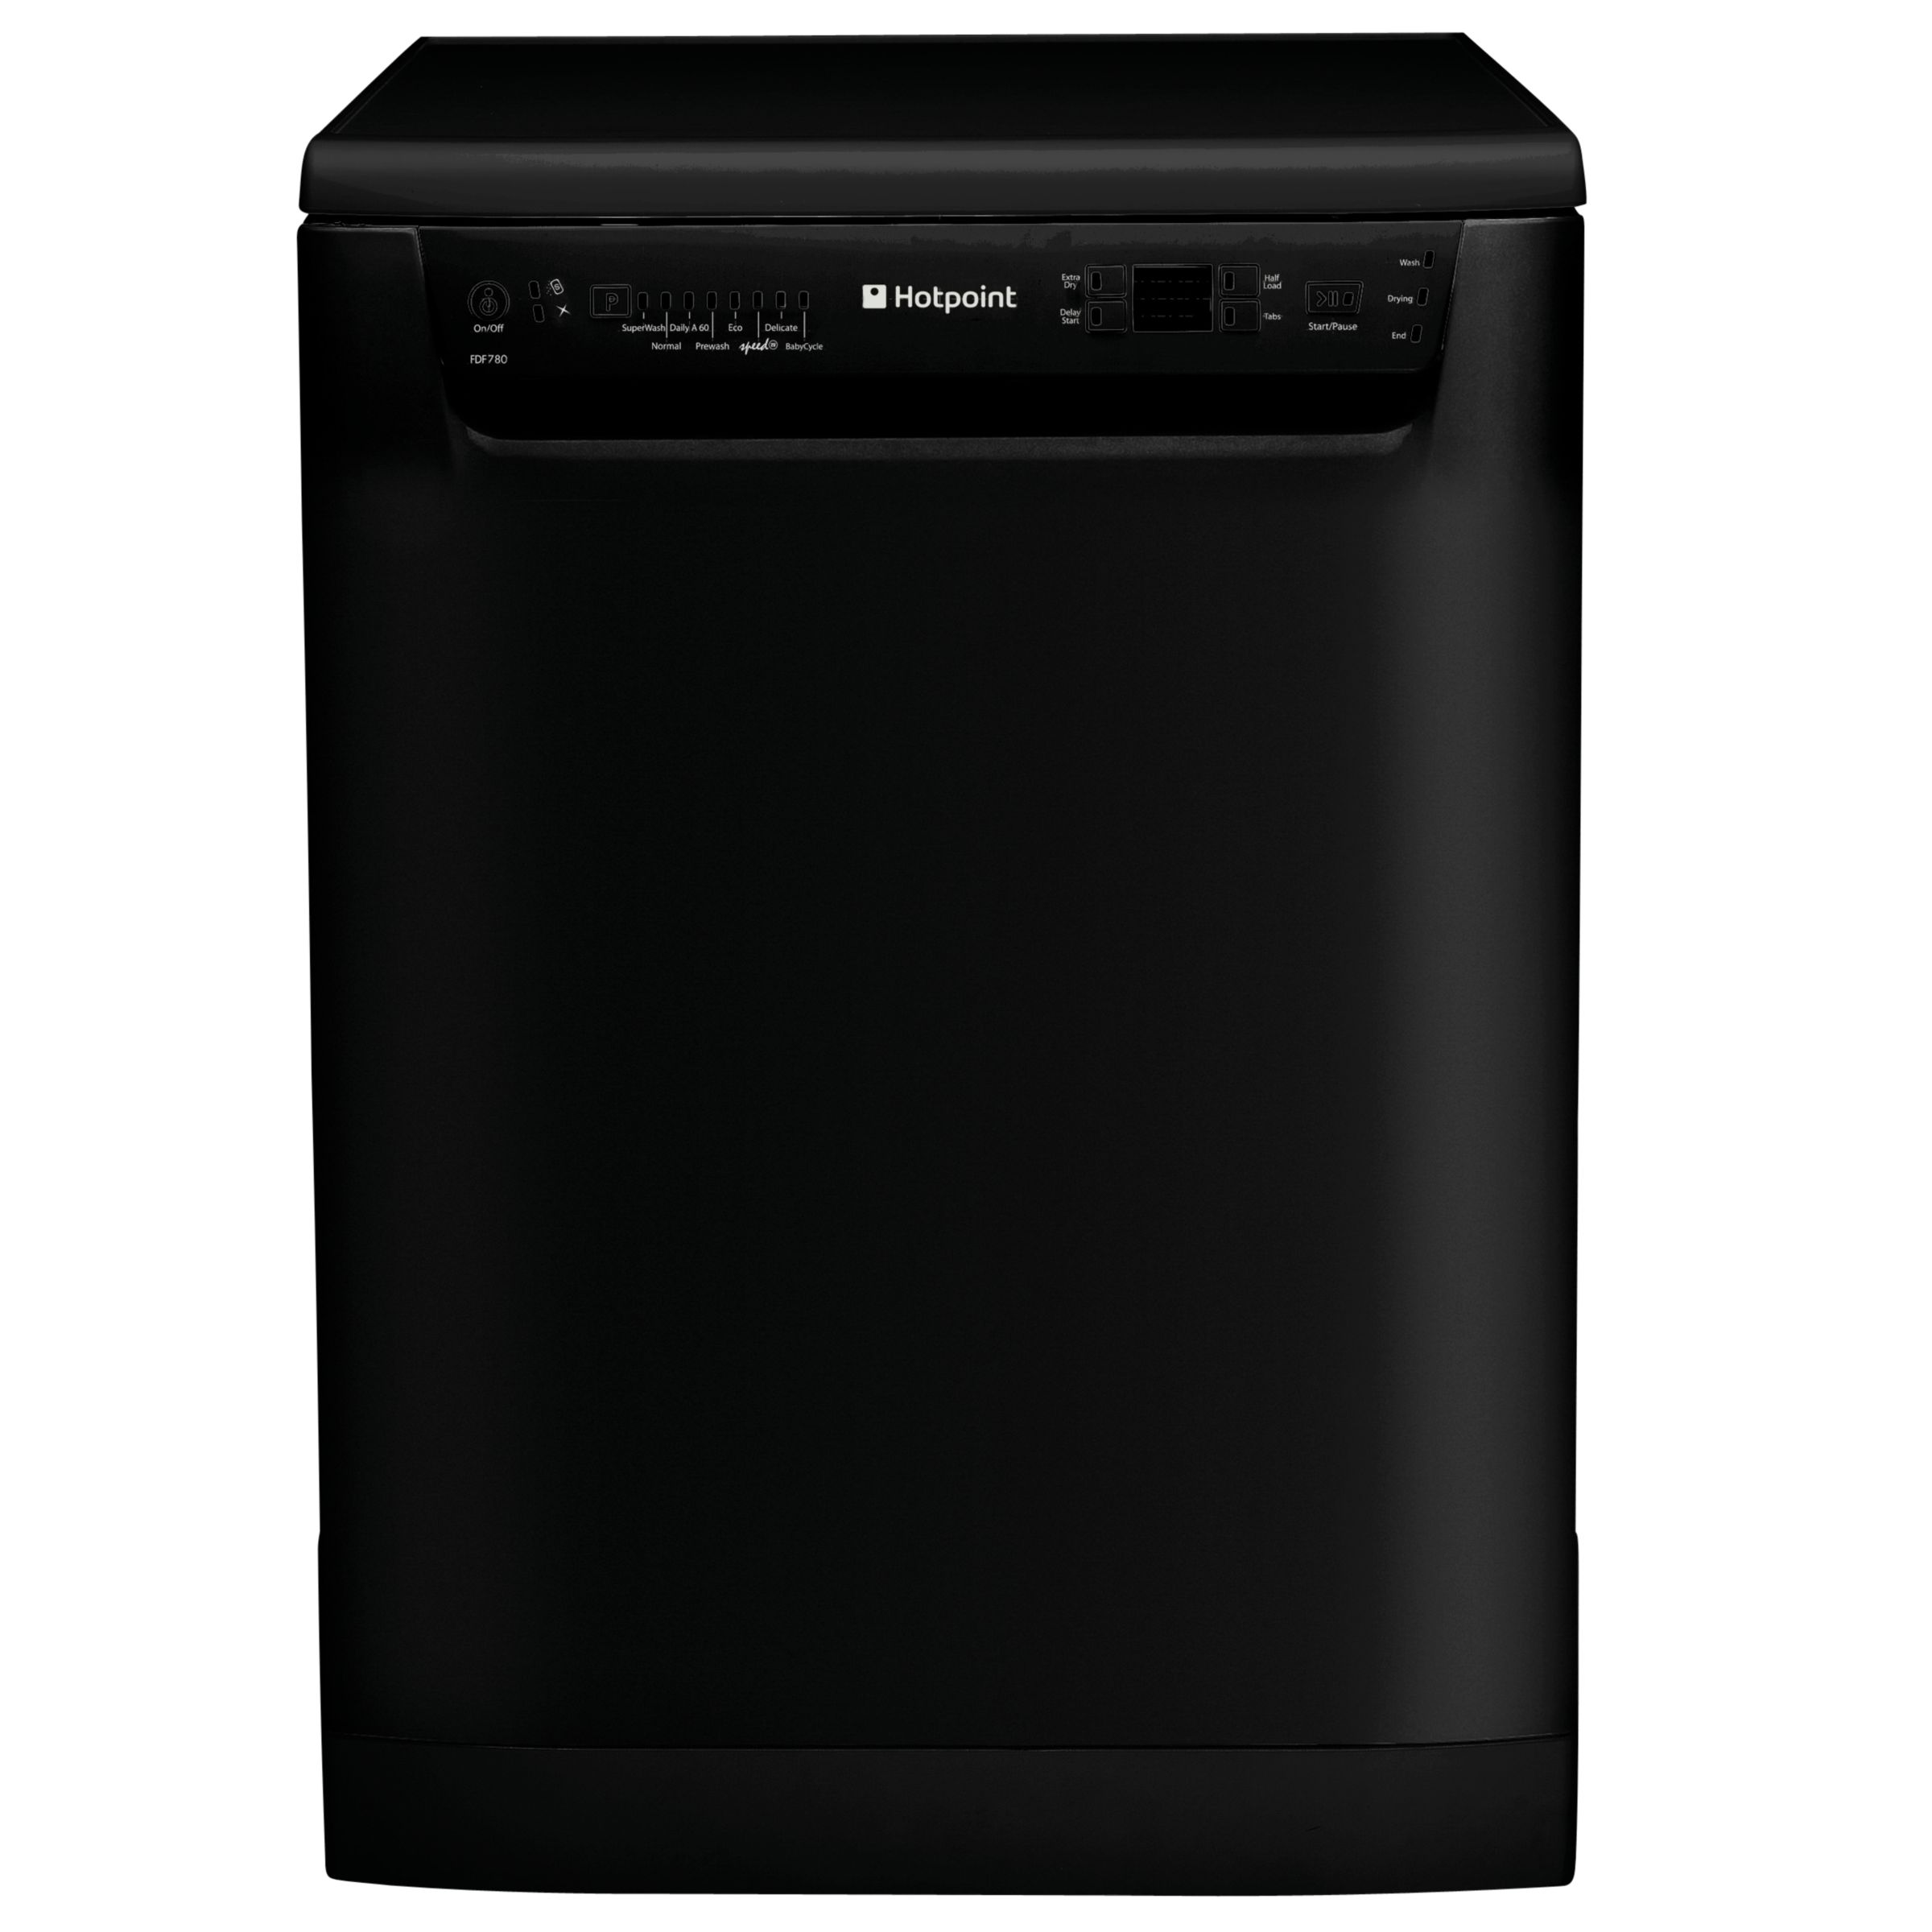 Hotpoint FDF784K Dishwasher, Black at JohnLewis